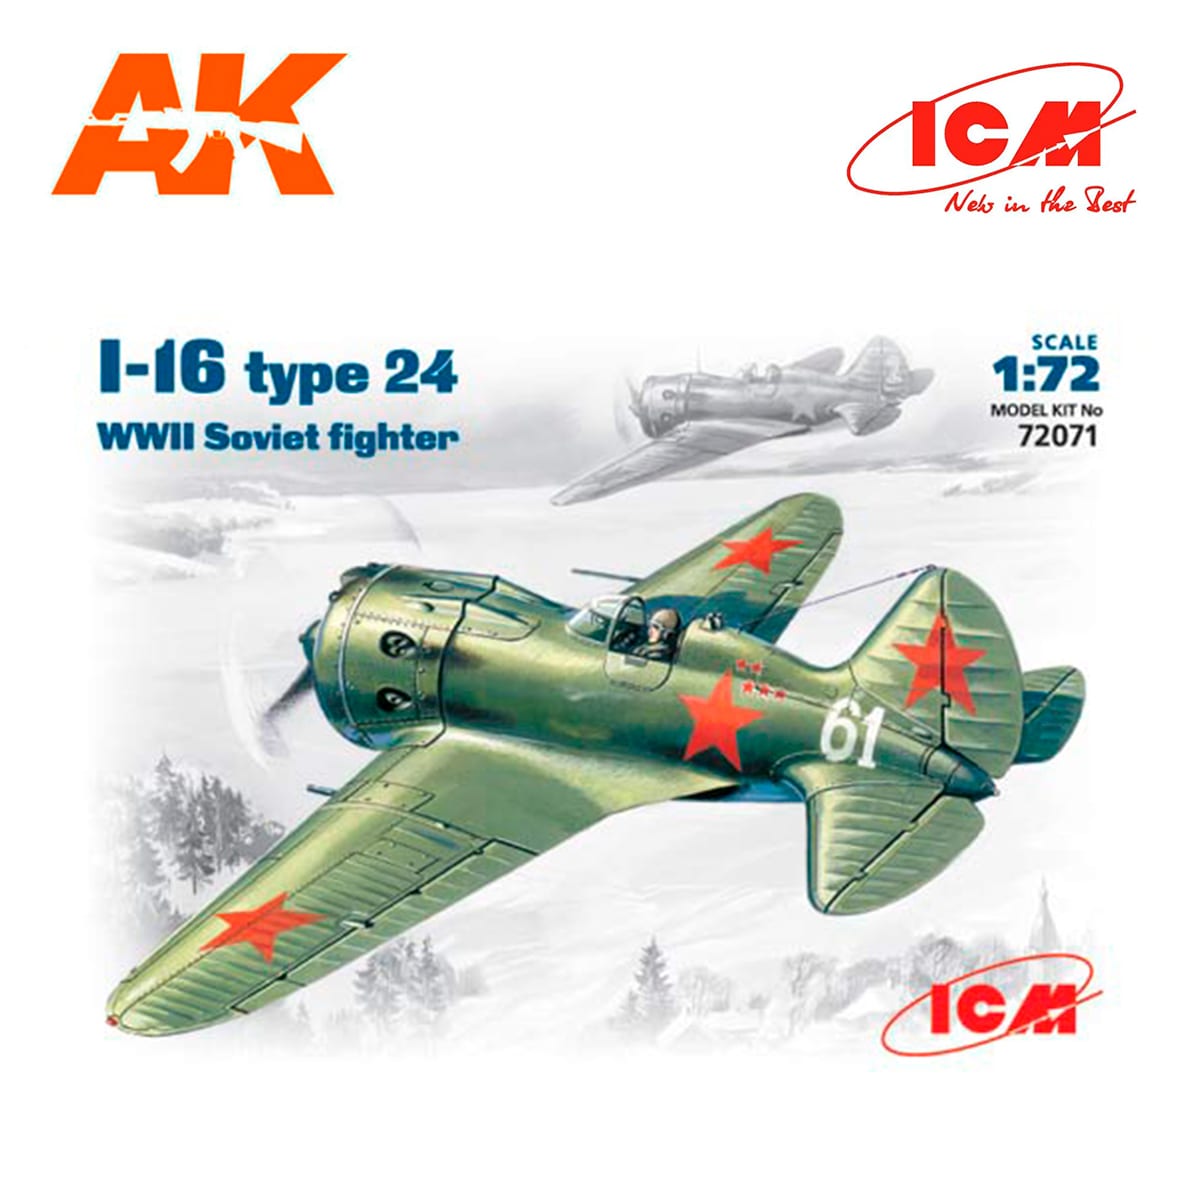 I-16 type 24, WWII Soviet Fighter 1/72